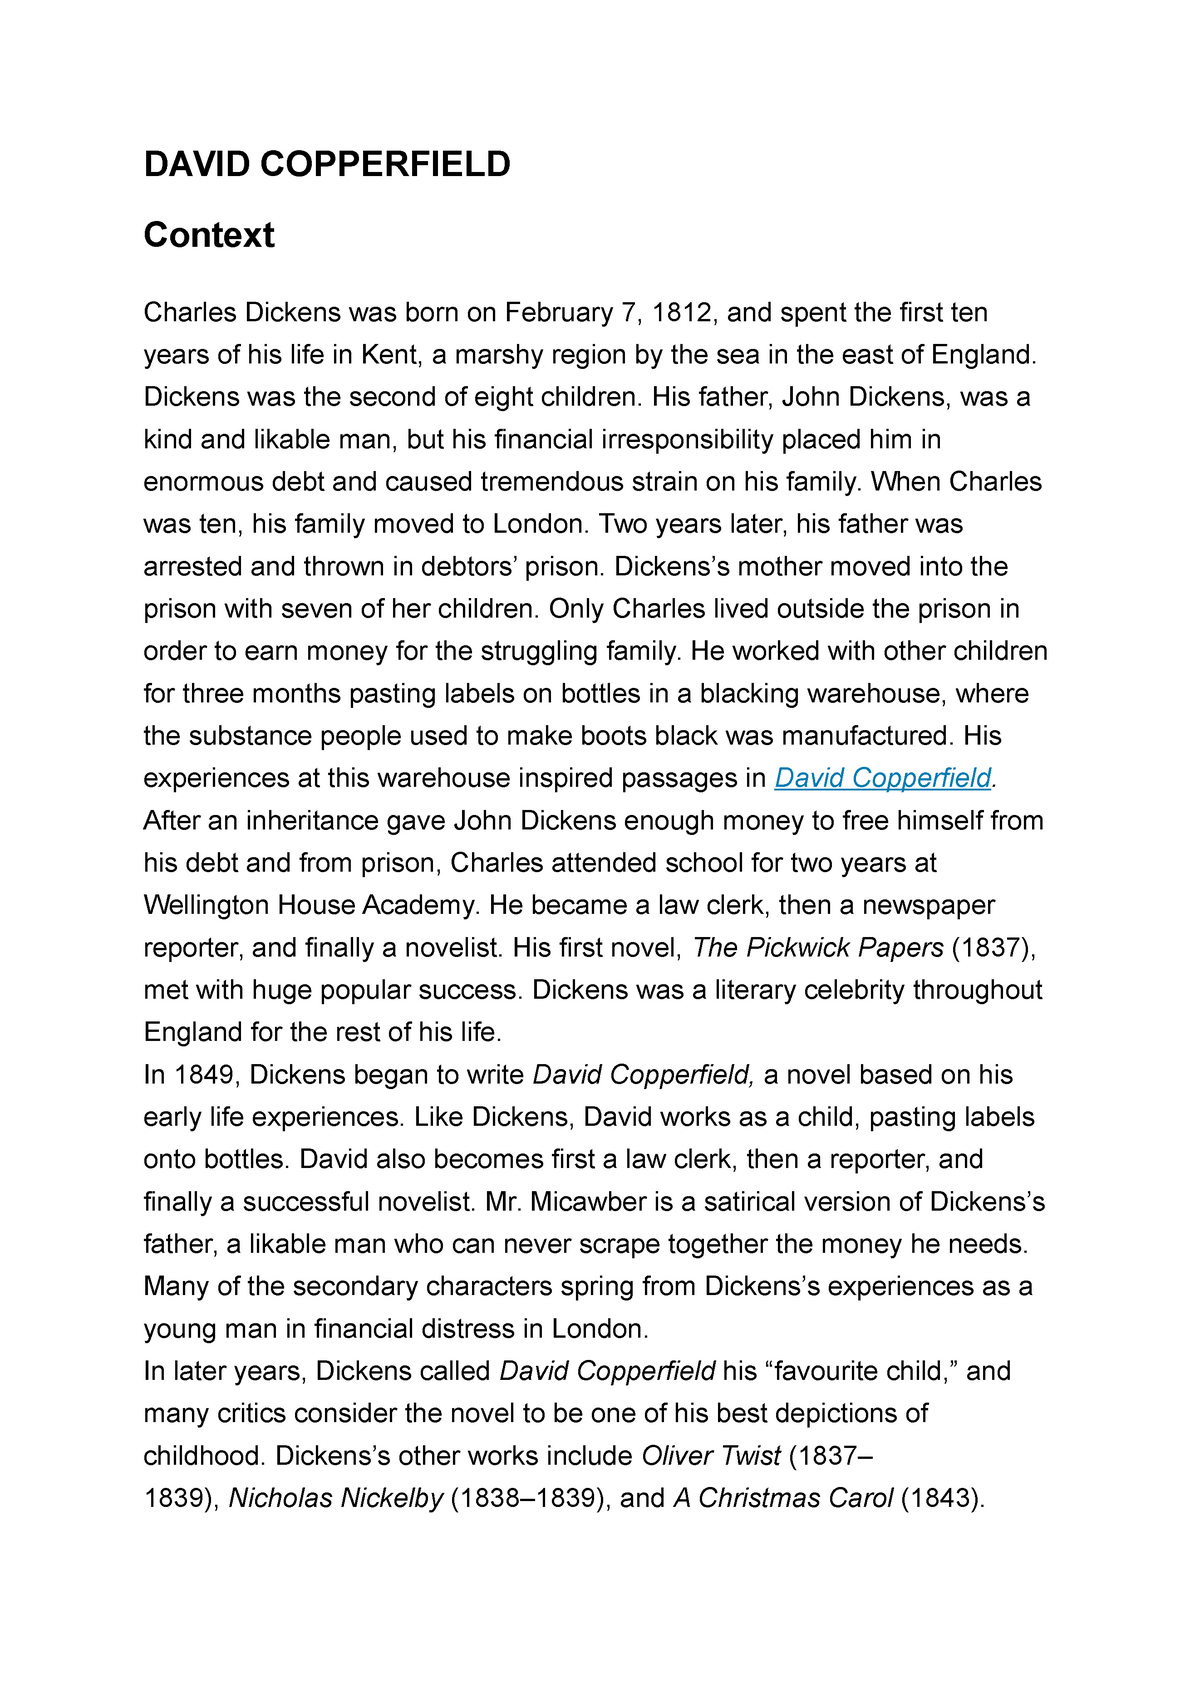 Dickens Champions: Belper read David Copperfield | News | RGfE